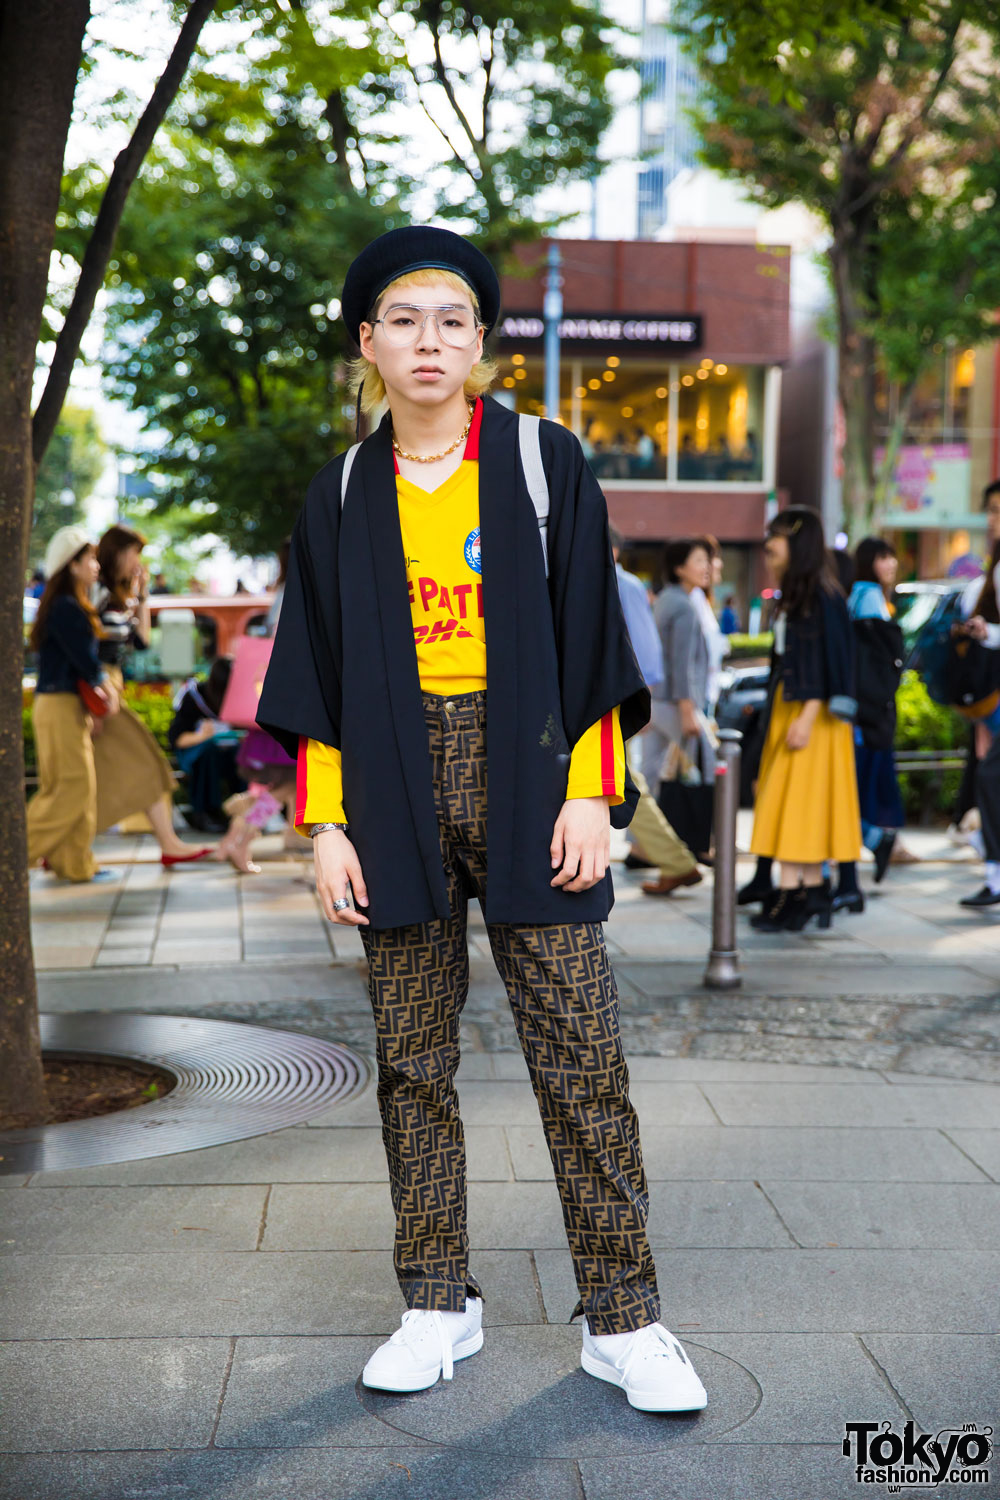 Harajuku Guy in Vintage Eclectic Fashion w/ DHL, Fendi, & Kappa